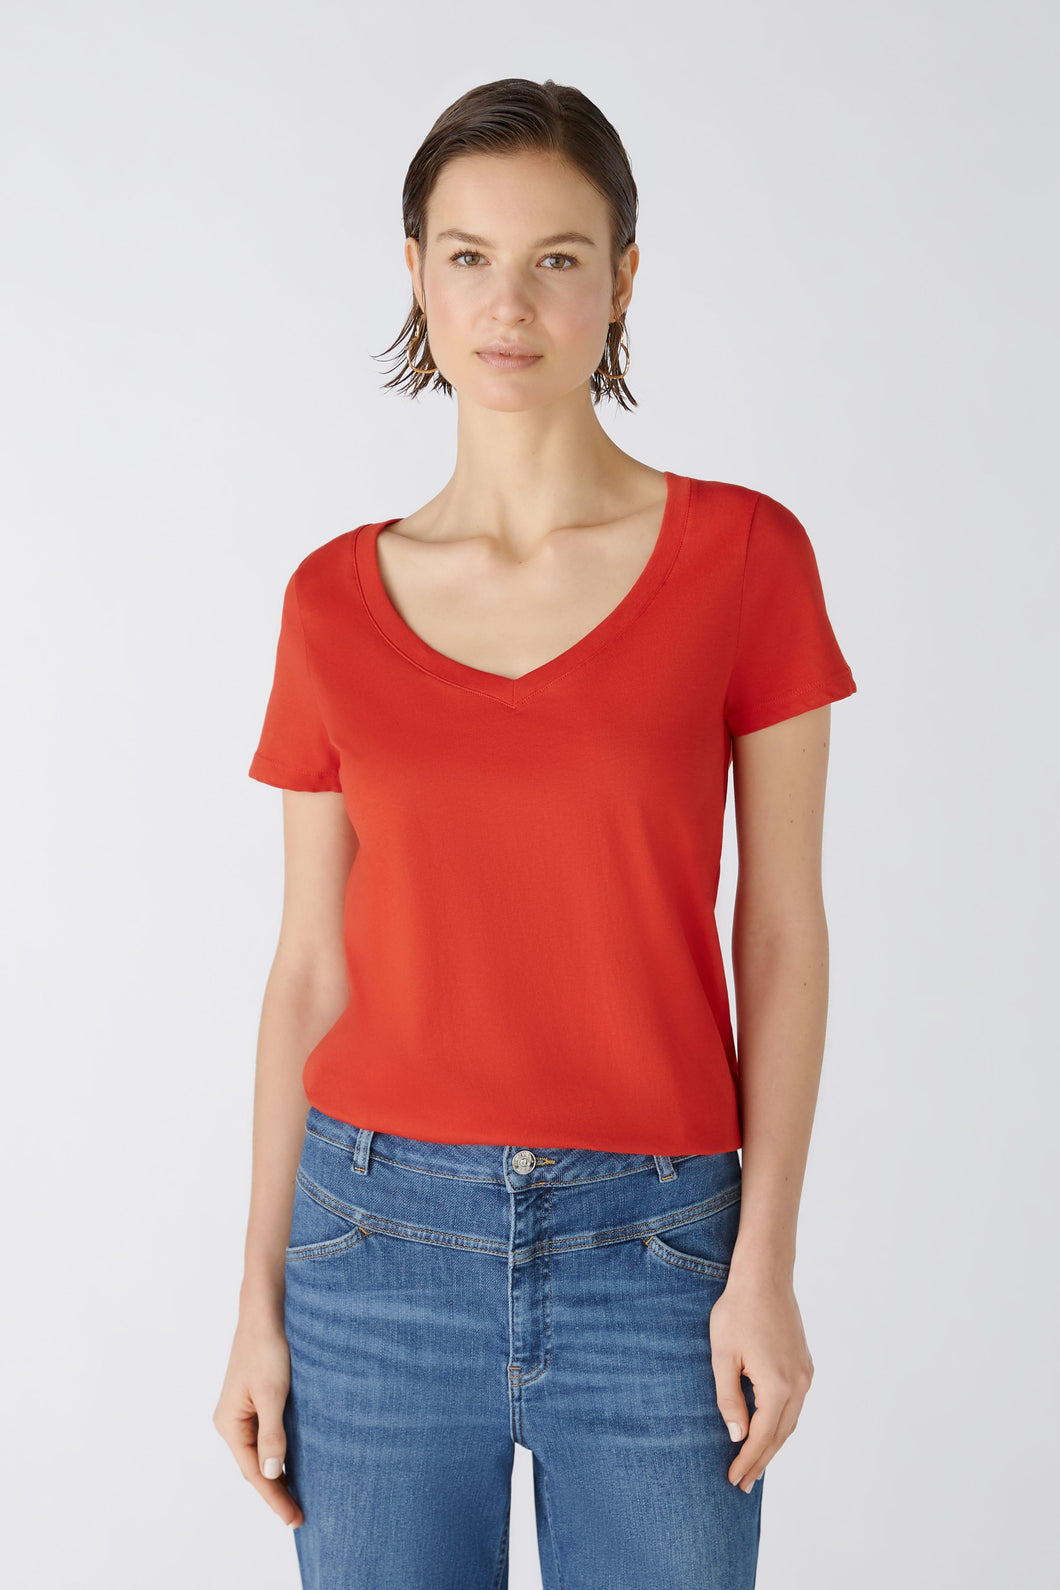 Oui - Carli T-Shirt 100% Organic Cotton